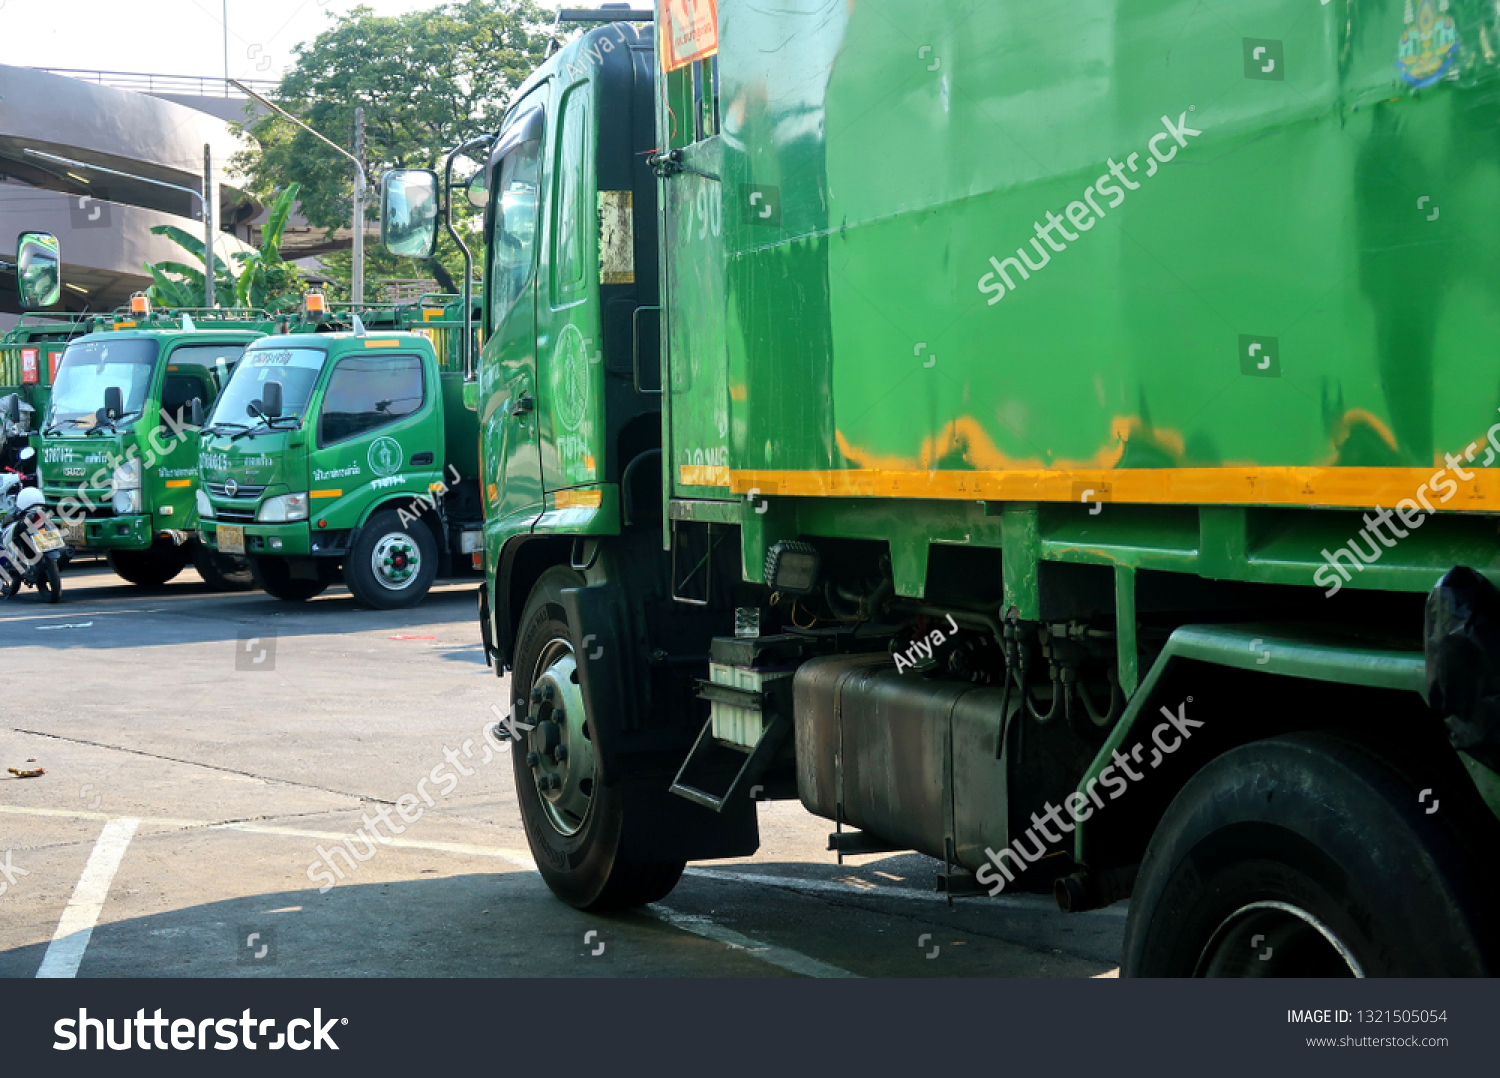 Bangkok/Thailand - February 22,2019 : Green garbage trucks in Bangkok city #1321505054